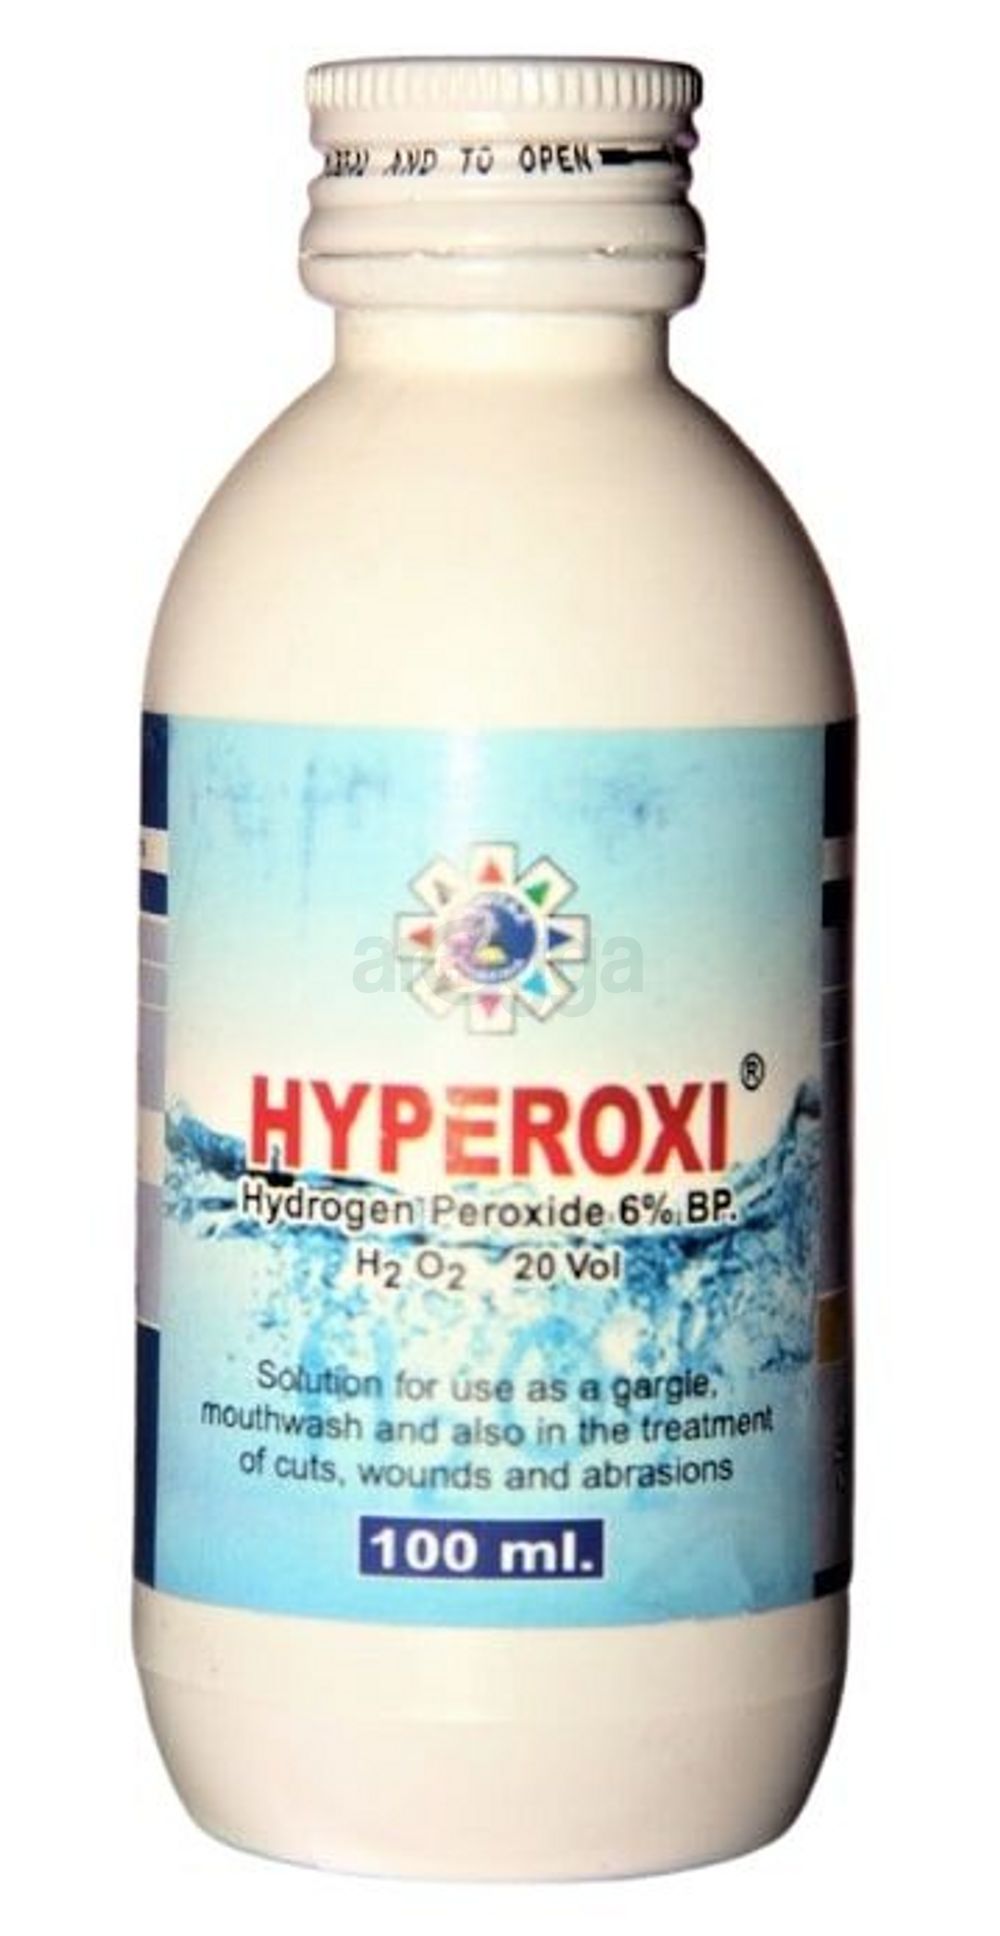 Hydrogen Peroxide (Hyperoxi) Solution 6% - healthcare - Arogga